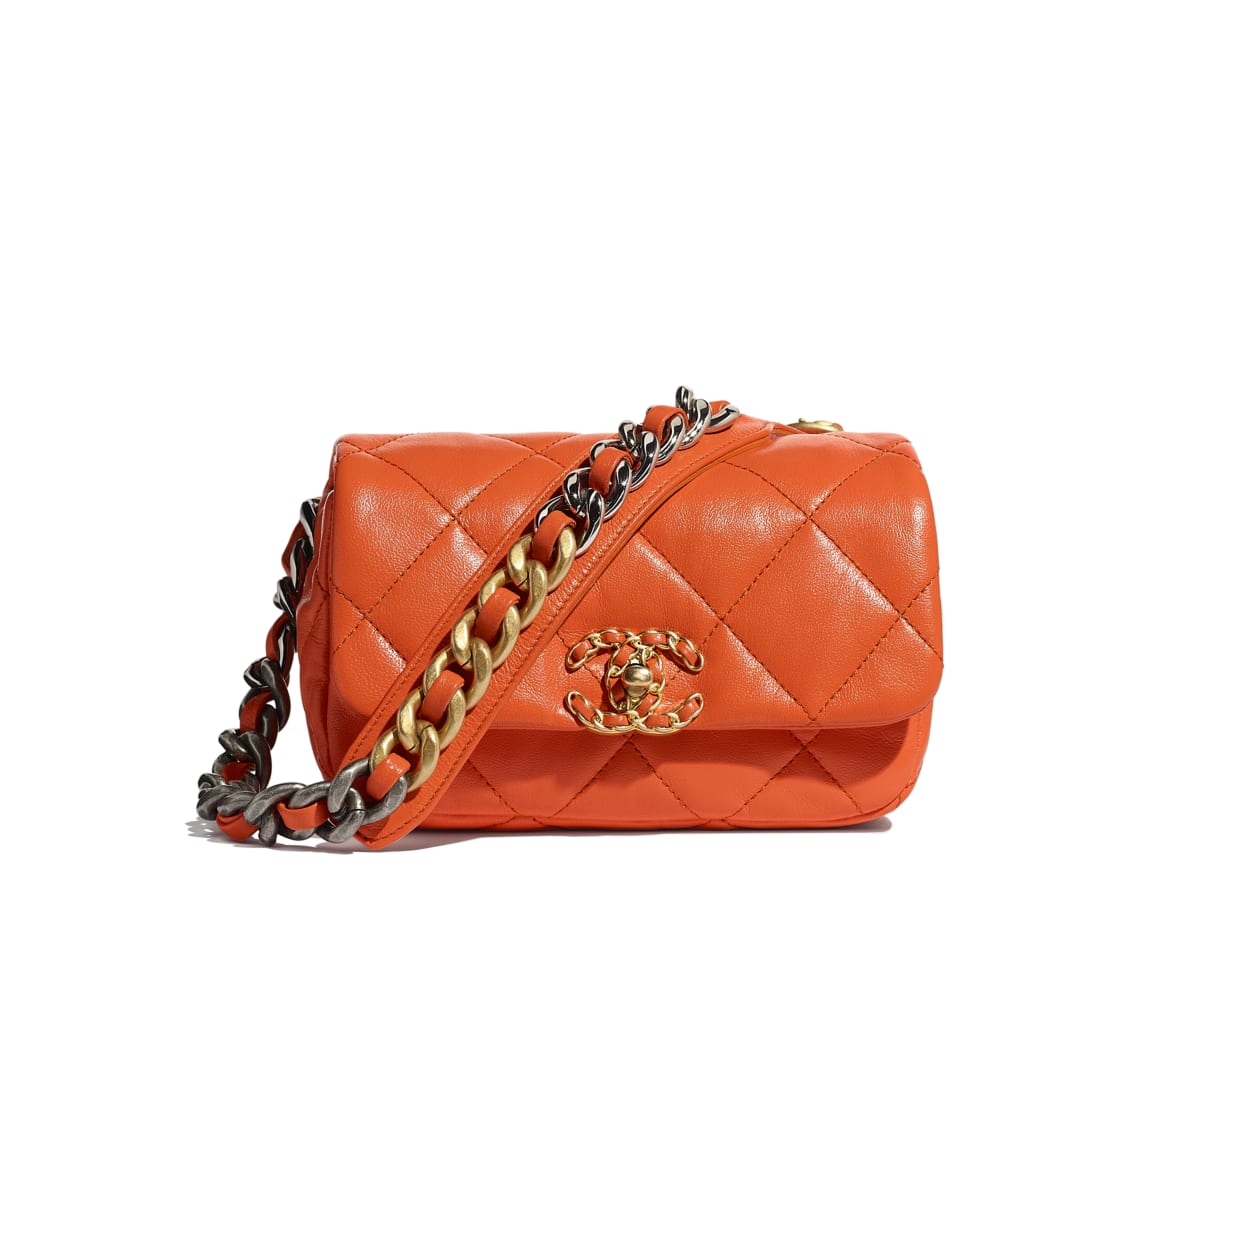 Chanel 19 Waist Bag Tweed Gold/Ruthenium-tone Pink in Tweed with